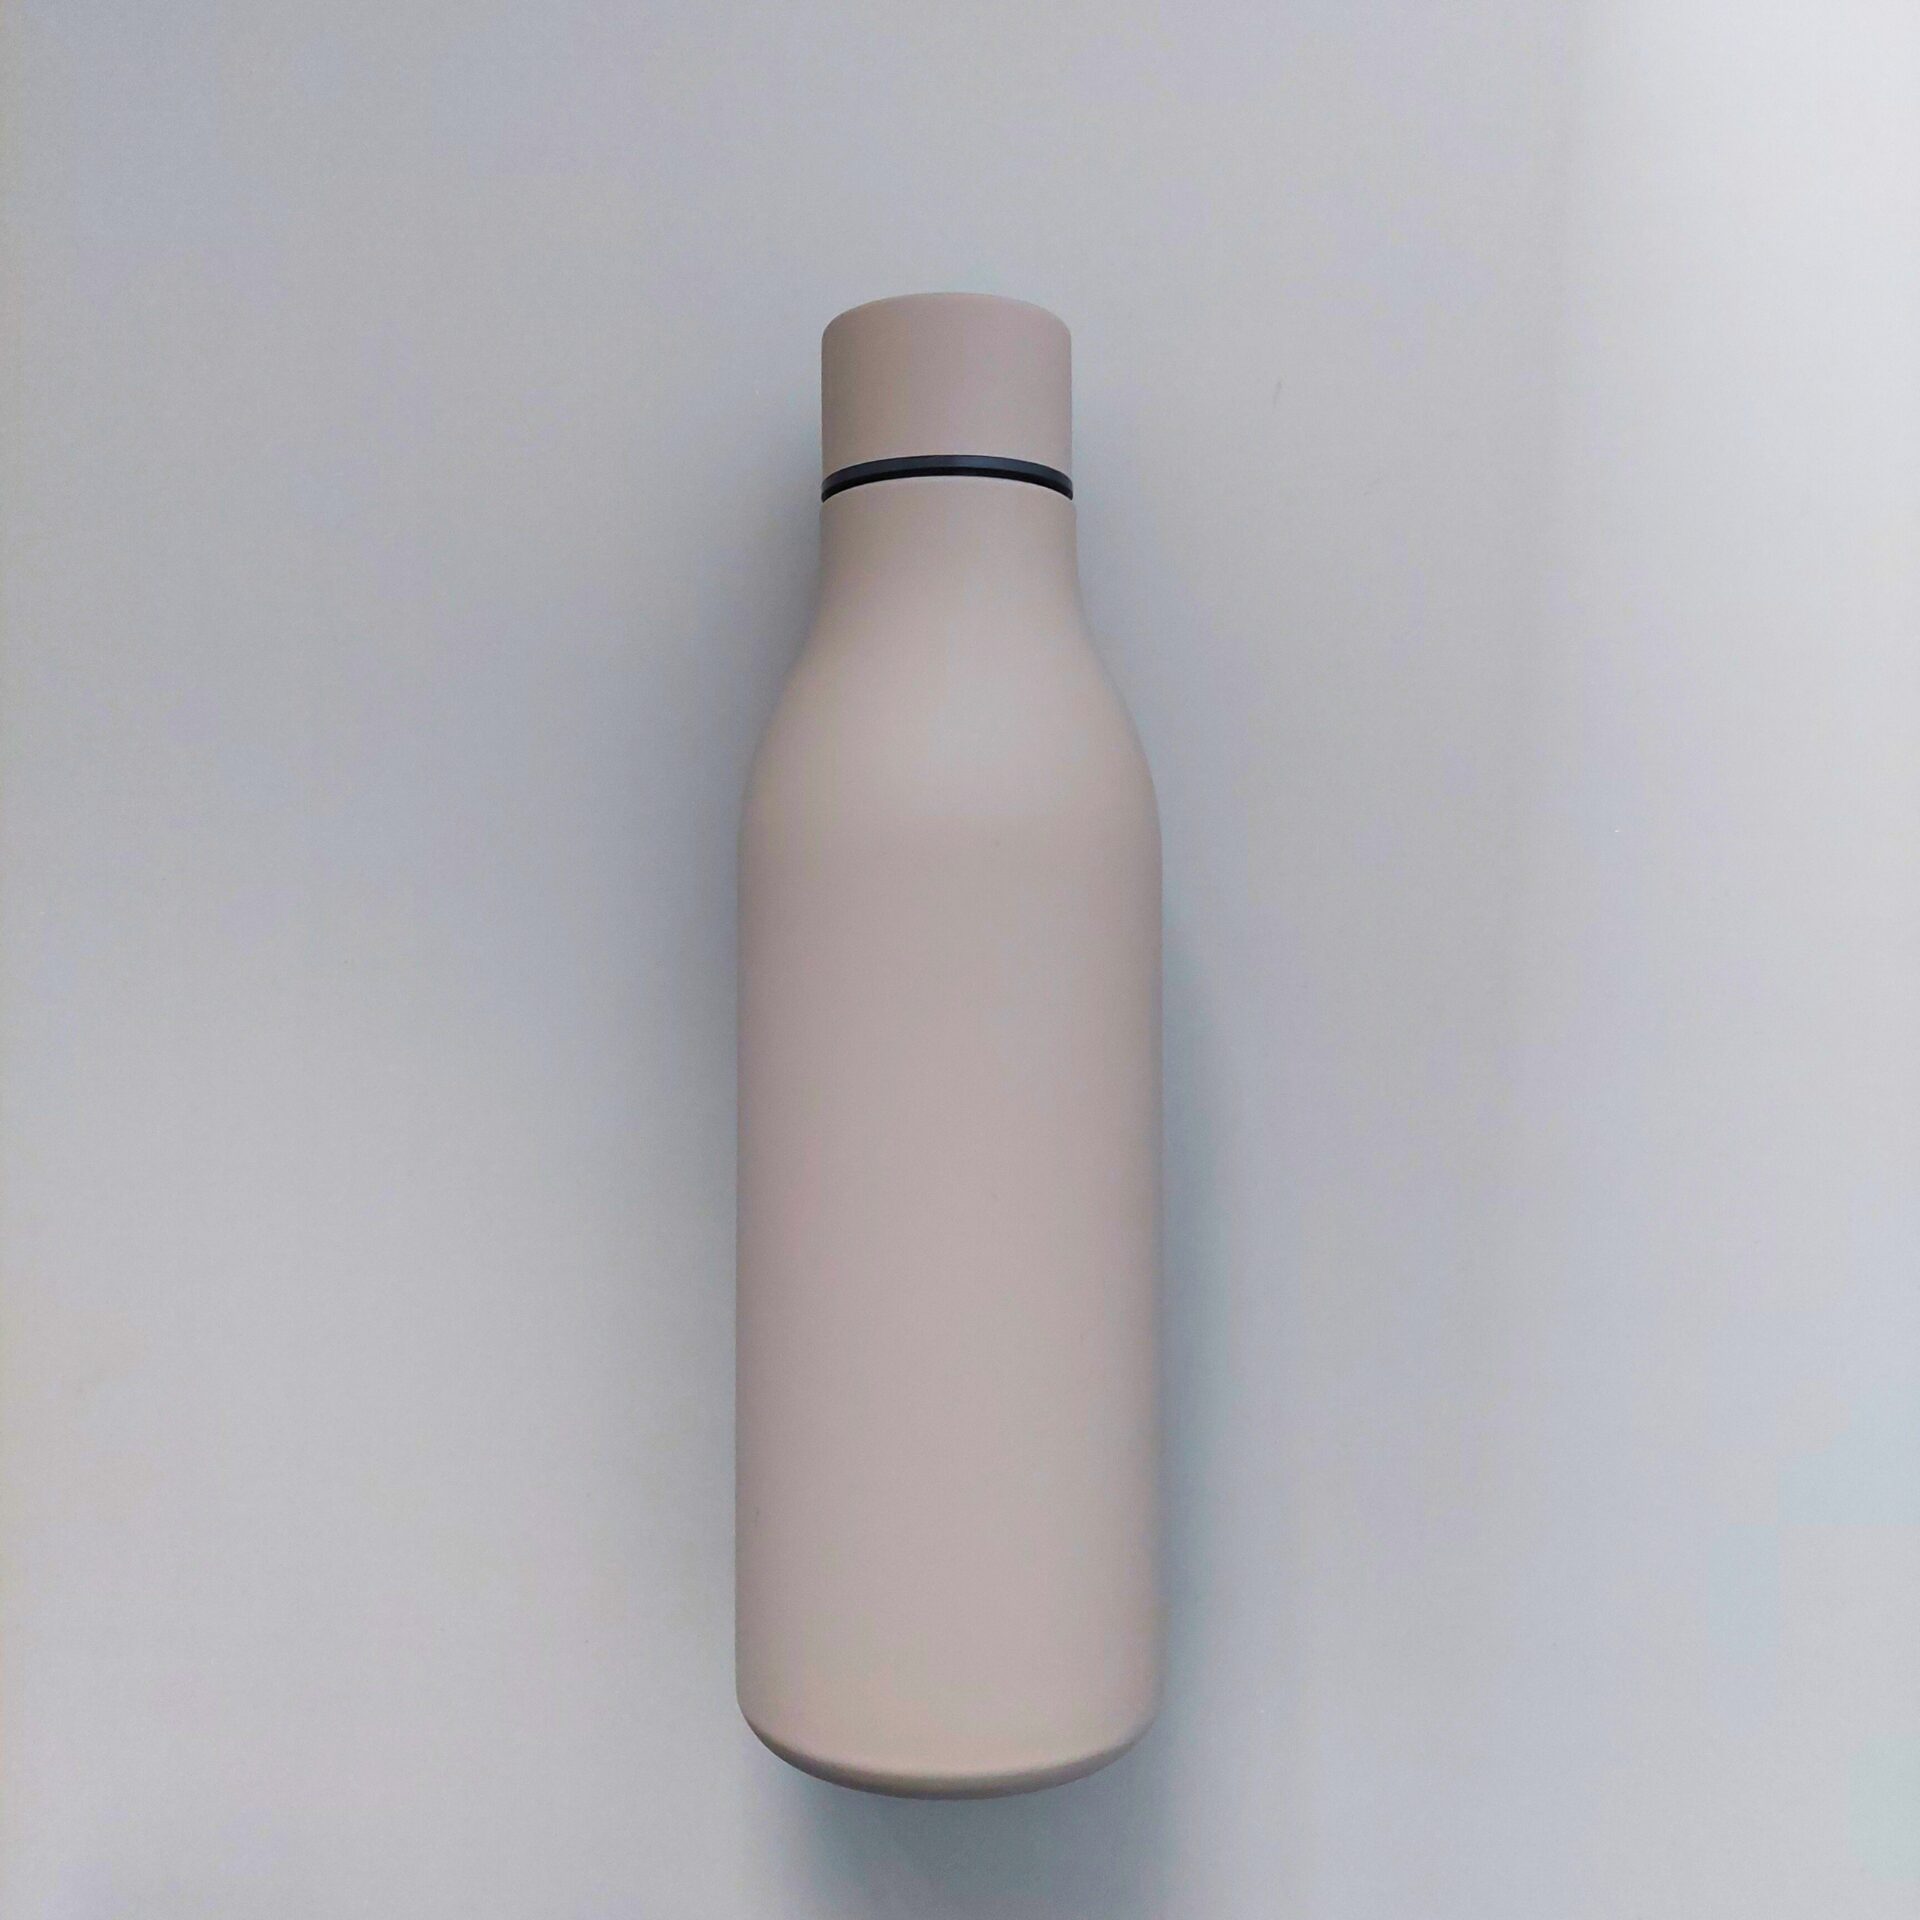 water bottle corporate gifts singapore botoro by pisteuo studio